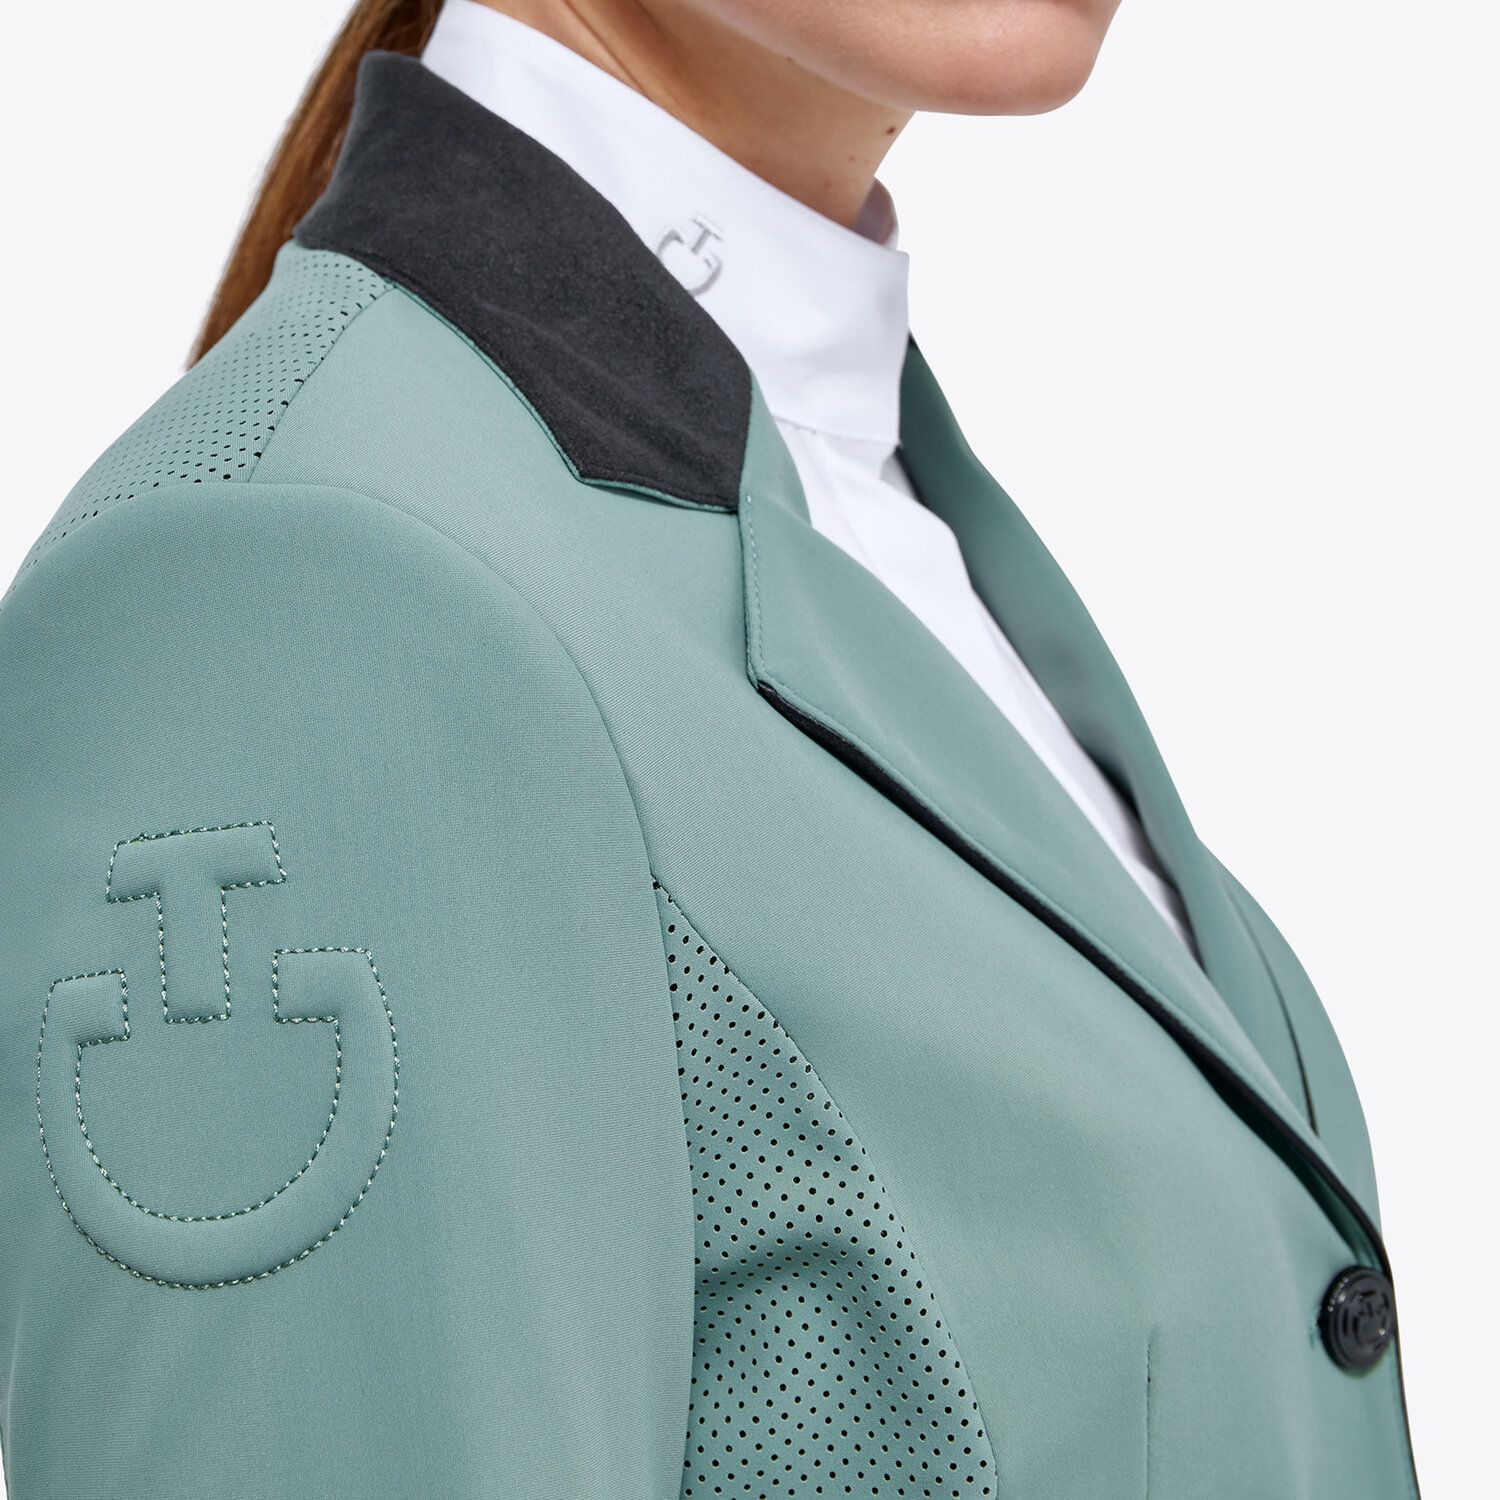 Cavalleria Toscana Women’s jacket in perforated fabric EMERALD GREY-5